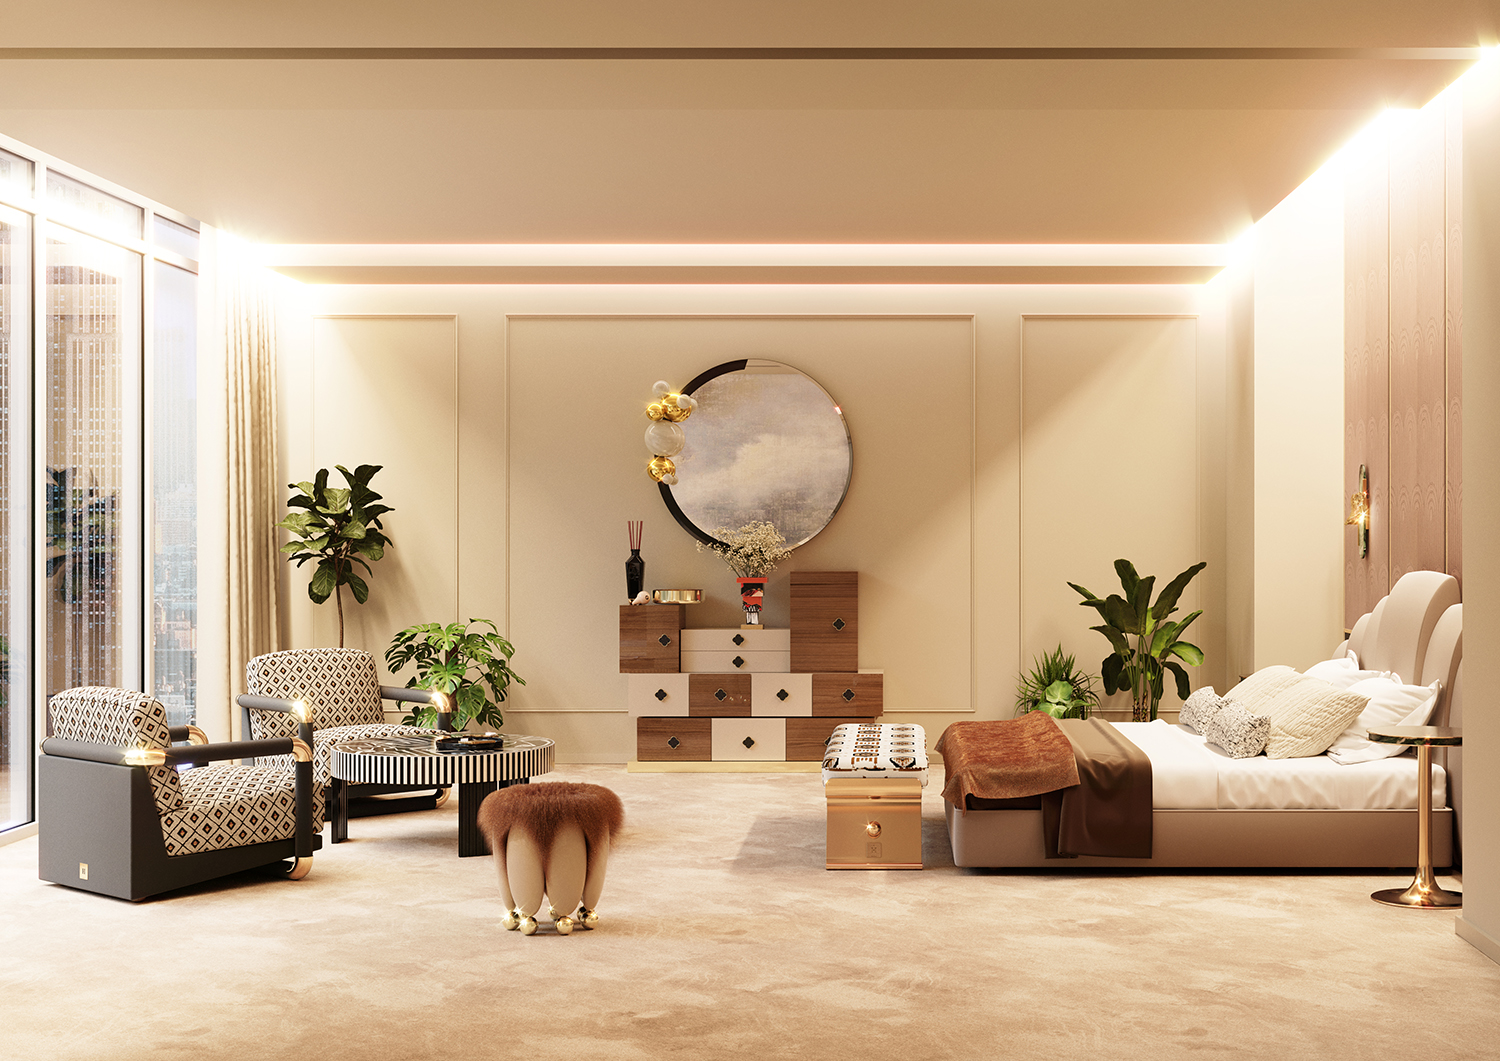 Bedroom Interior Design Collection - By Hommés Studio | Hommés Studio |  Modern Interior Design